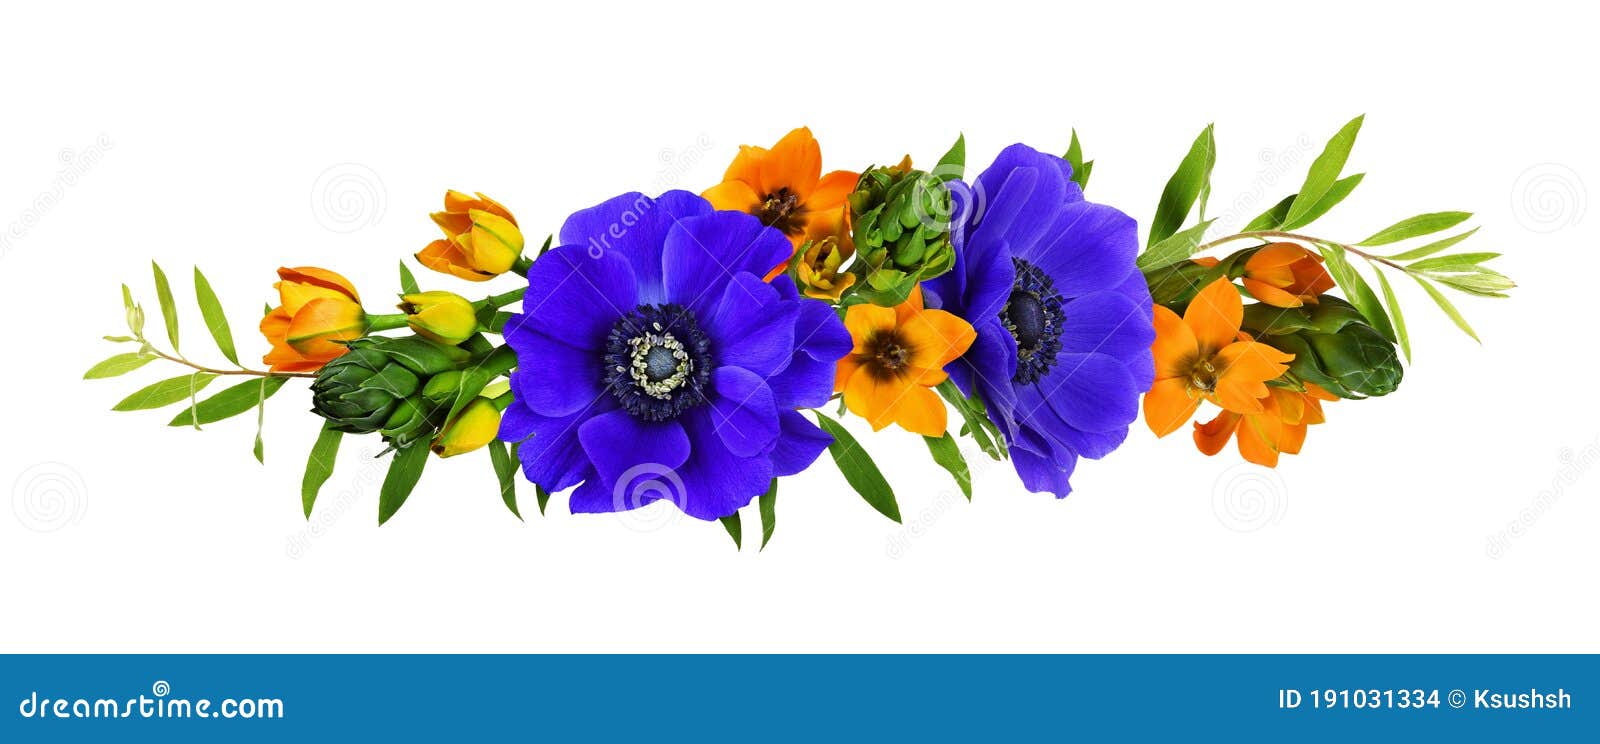 orange ornithogalum flowers and blue anemones in a floral arrangement